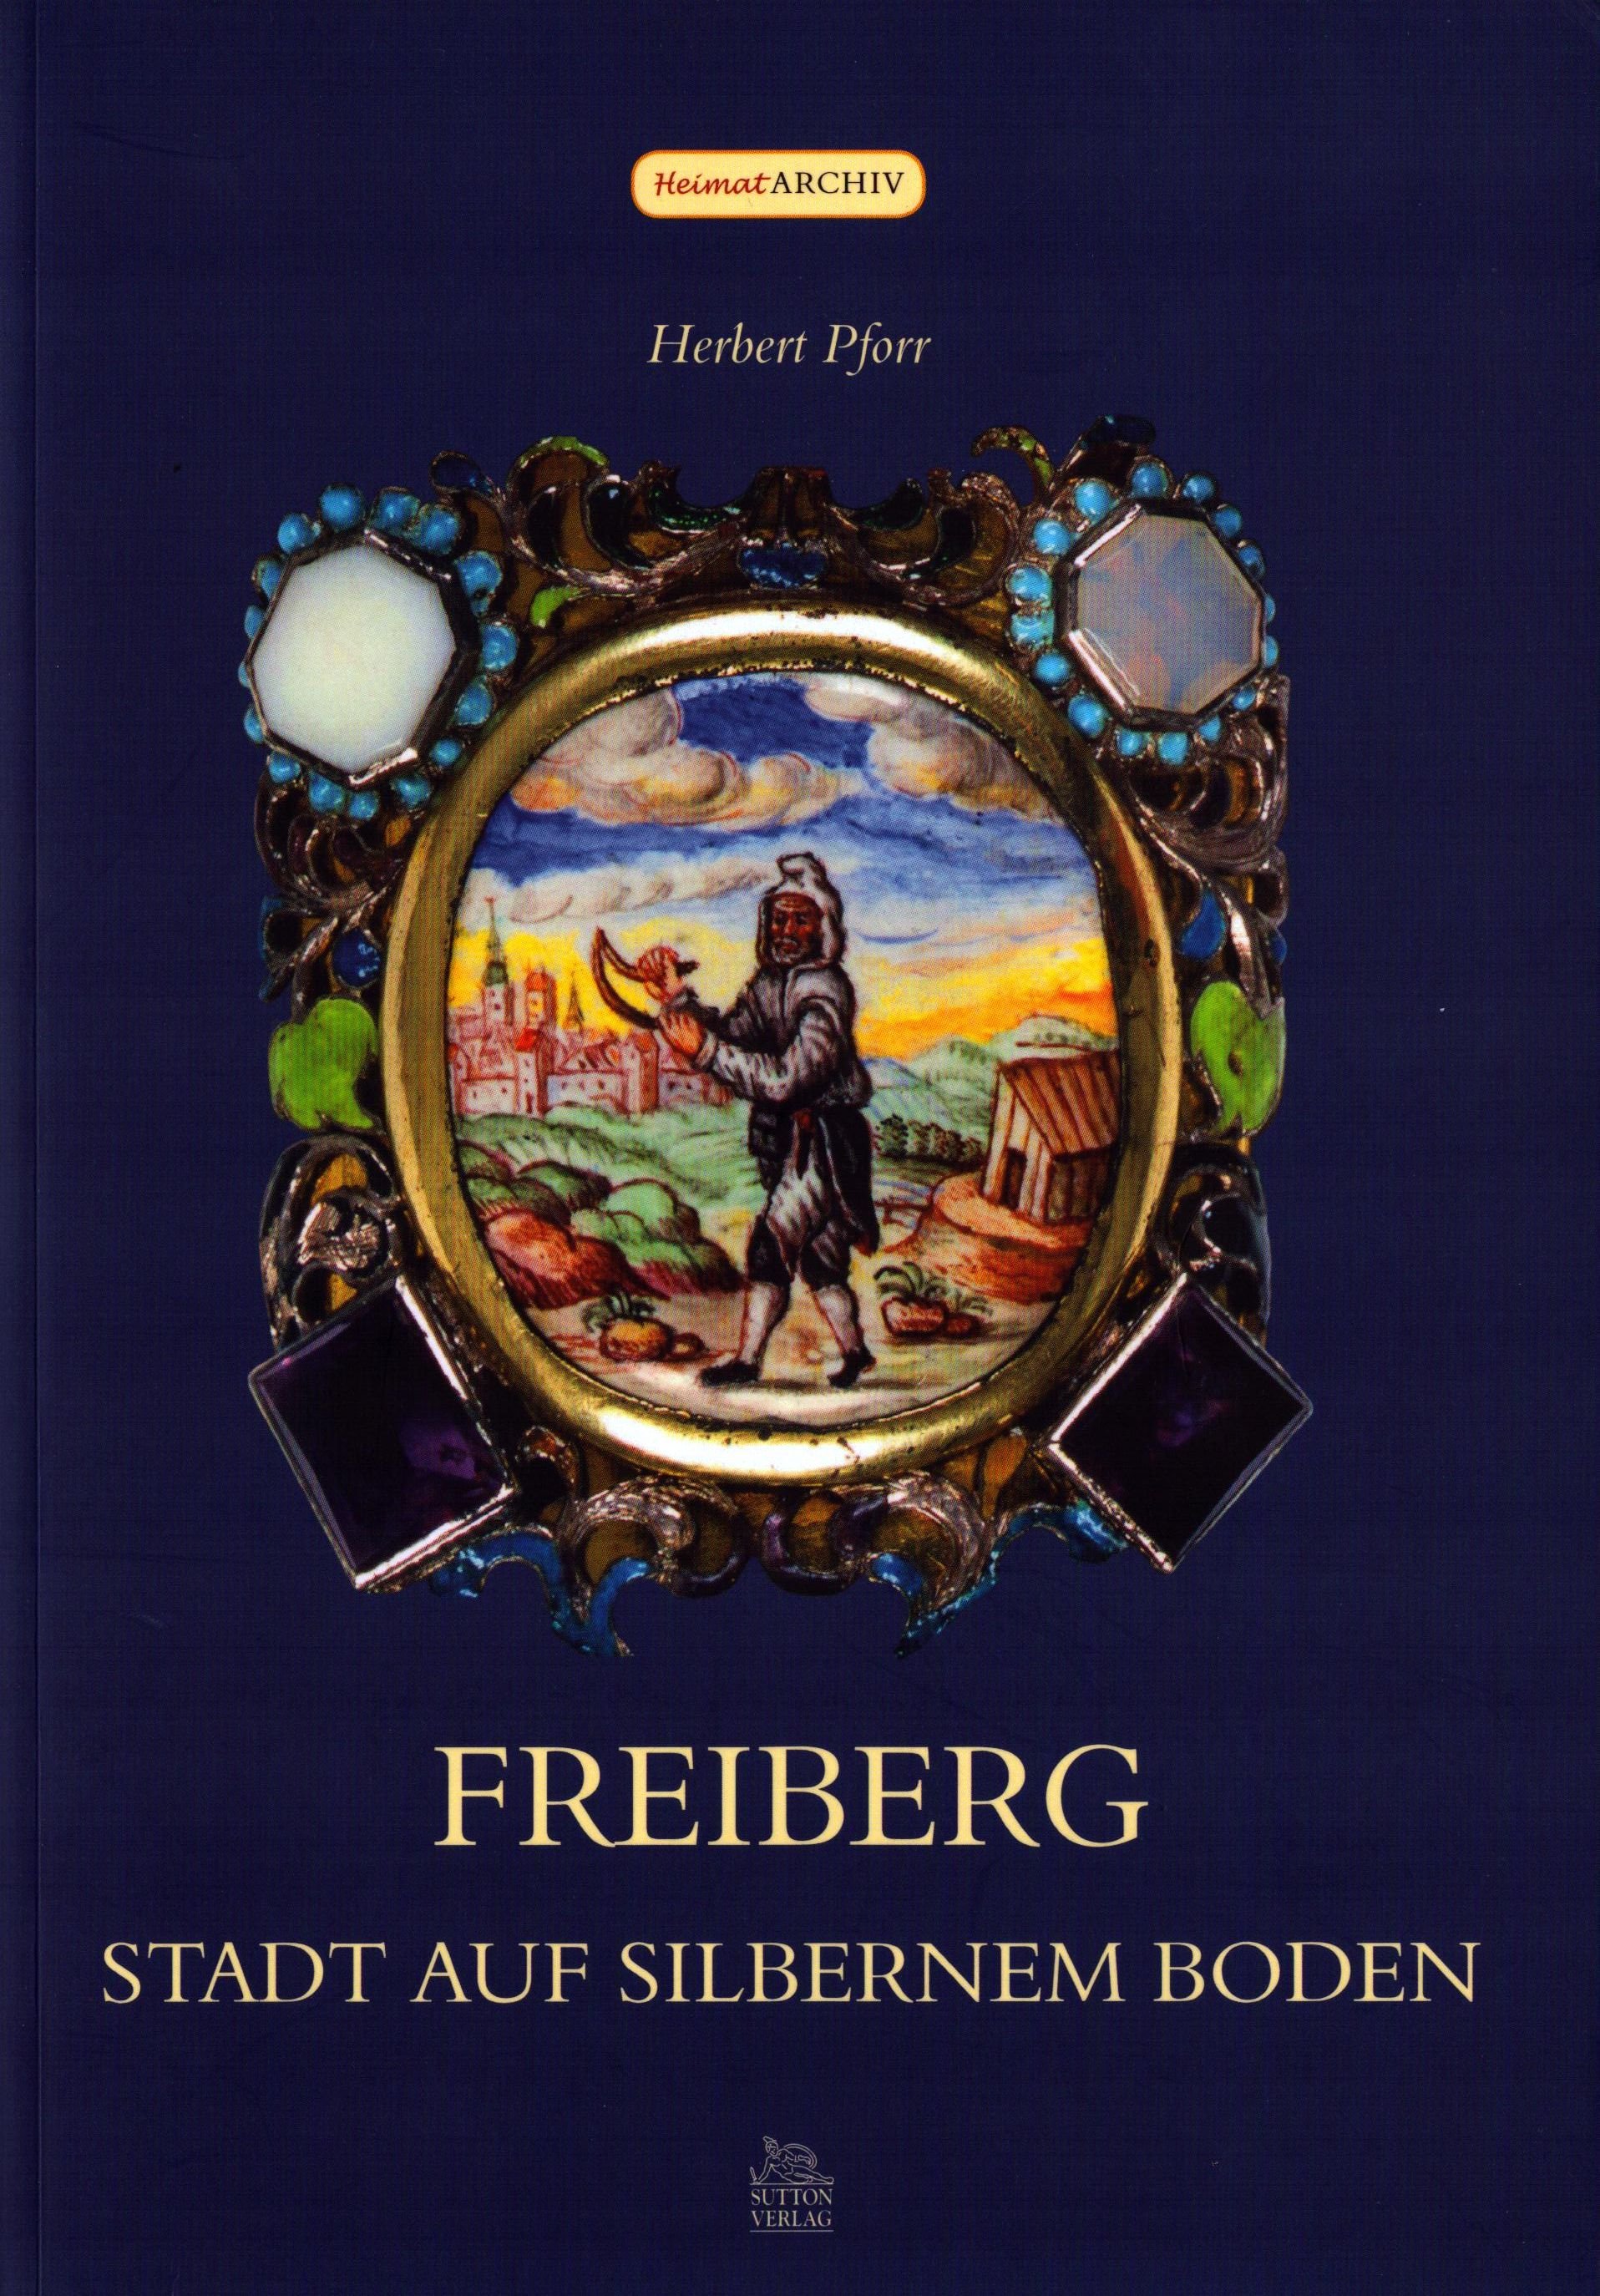 Freiberg - Stadt auf silbernem Boden (Archiv SAXONIA-FREIBERG-STIFTUNG CC BY-NC-SA)